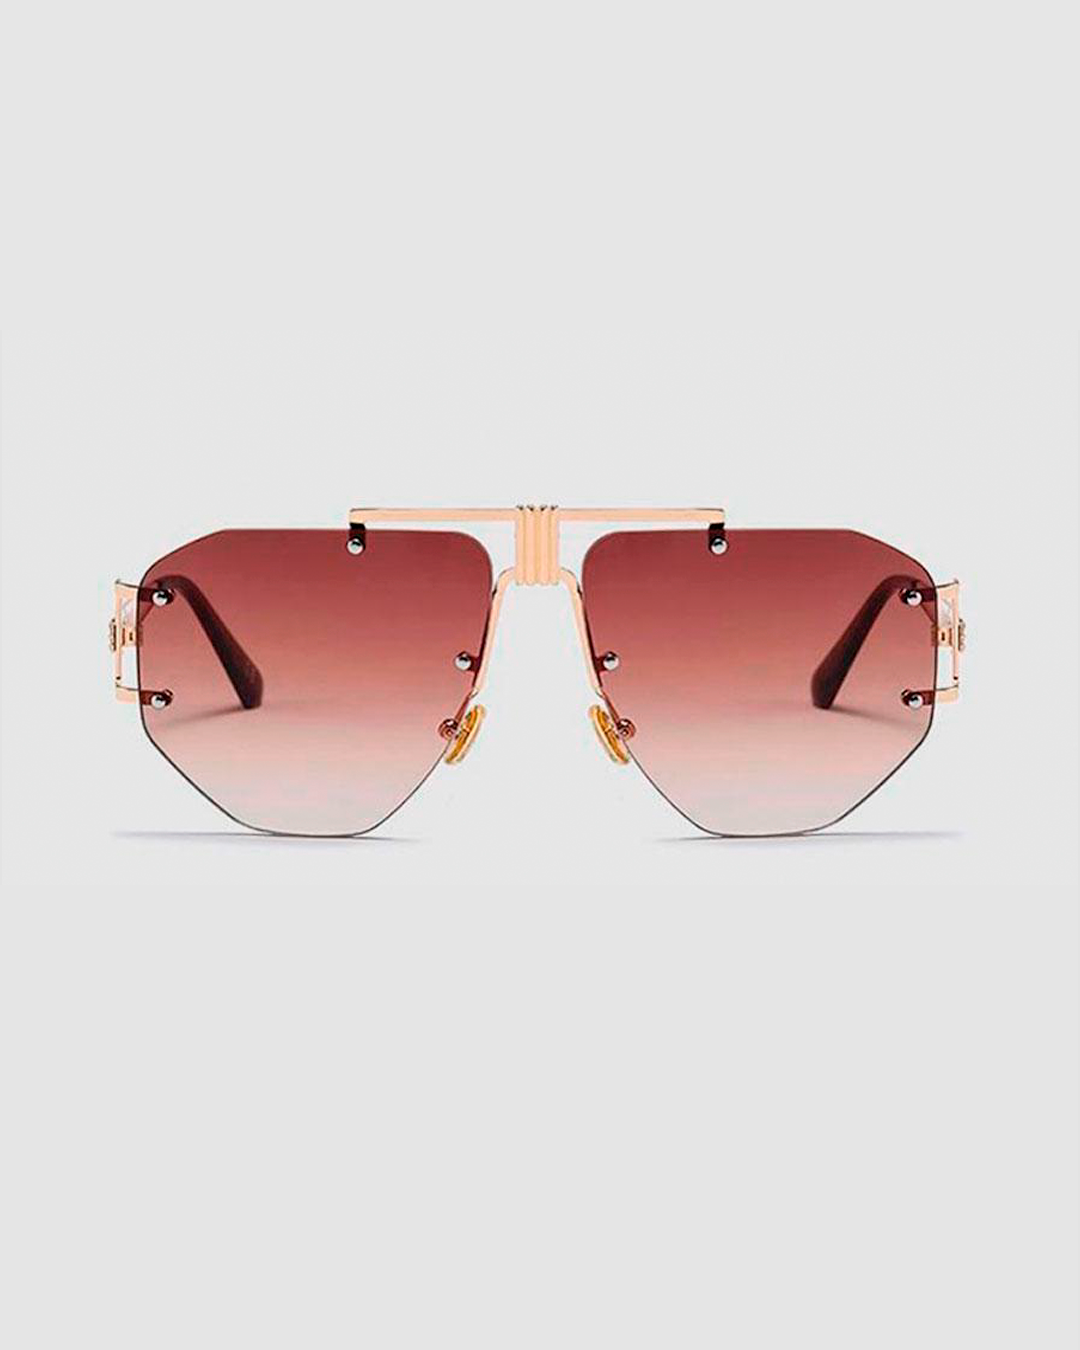 Cyclonus Sunglasses